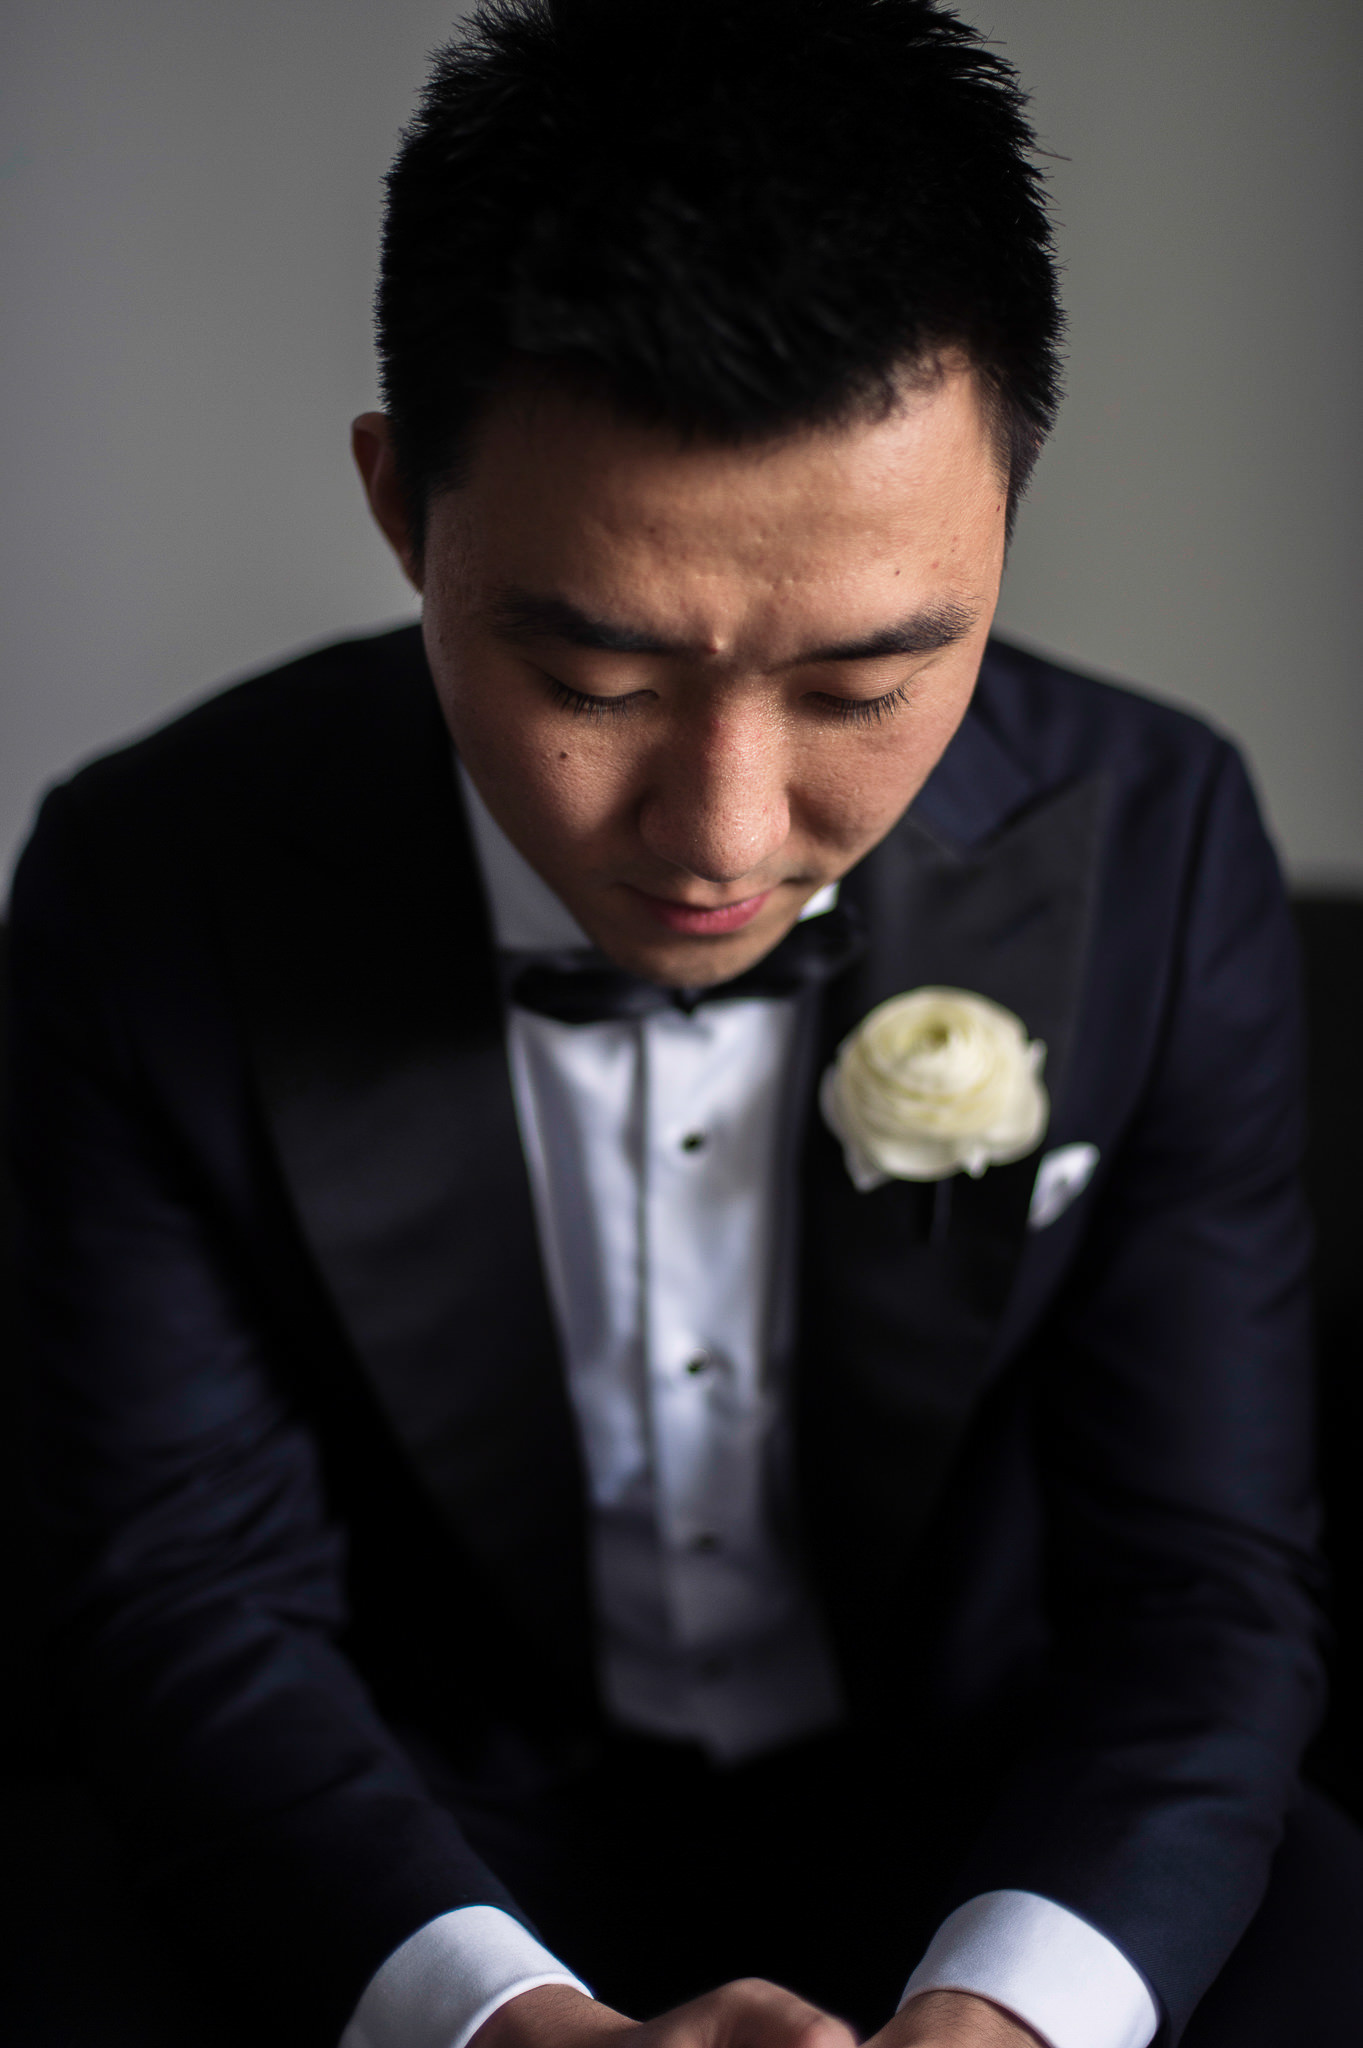 Sydney_Wedding_groom